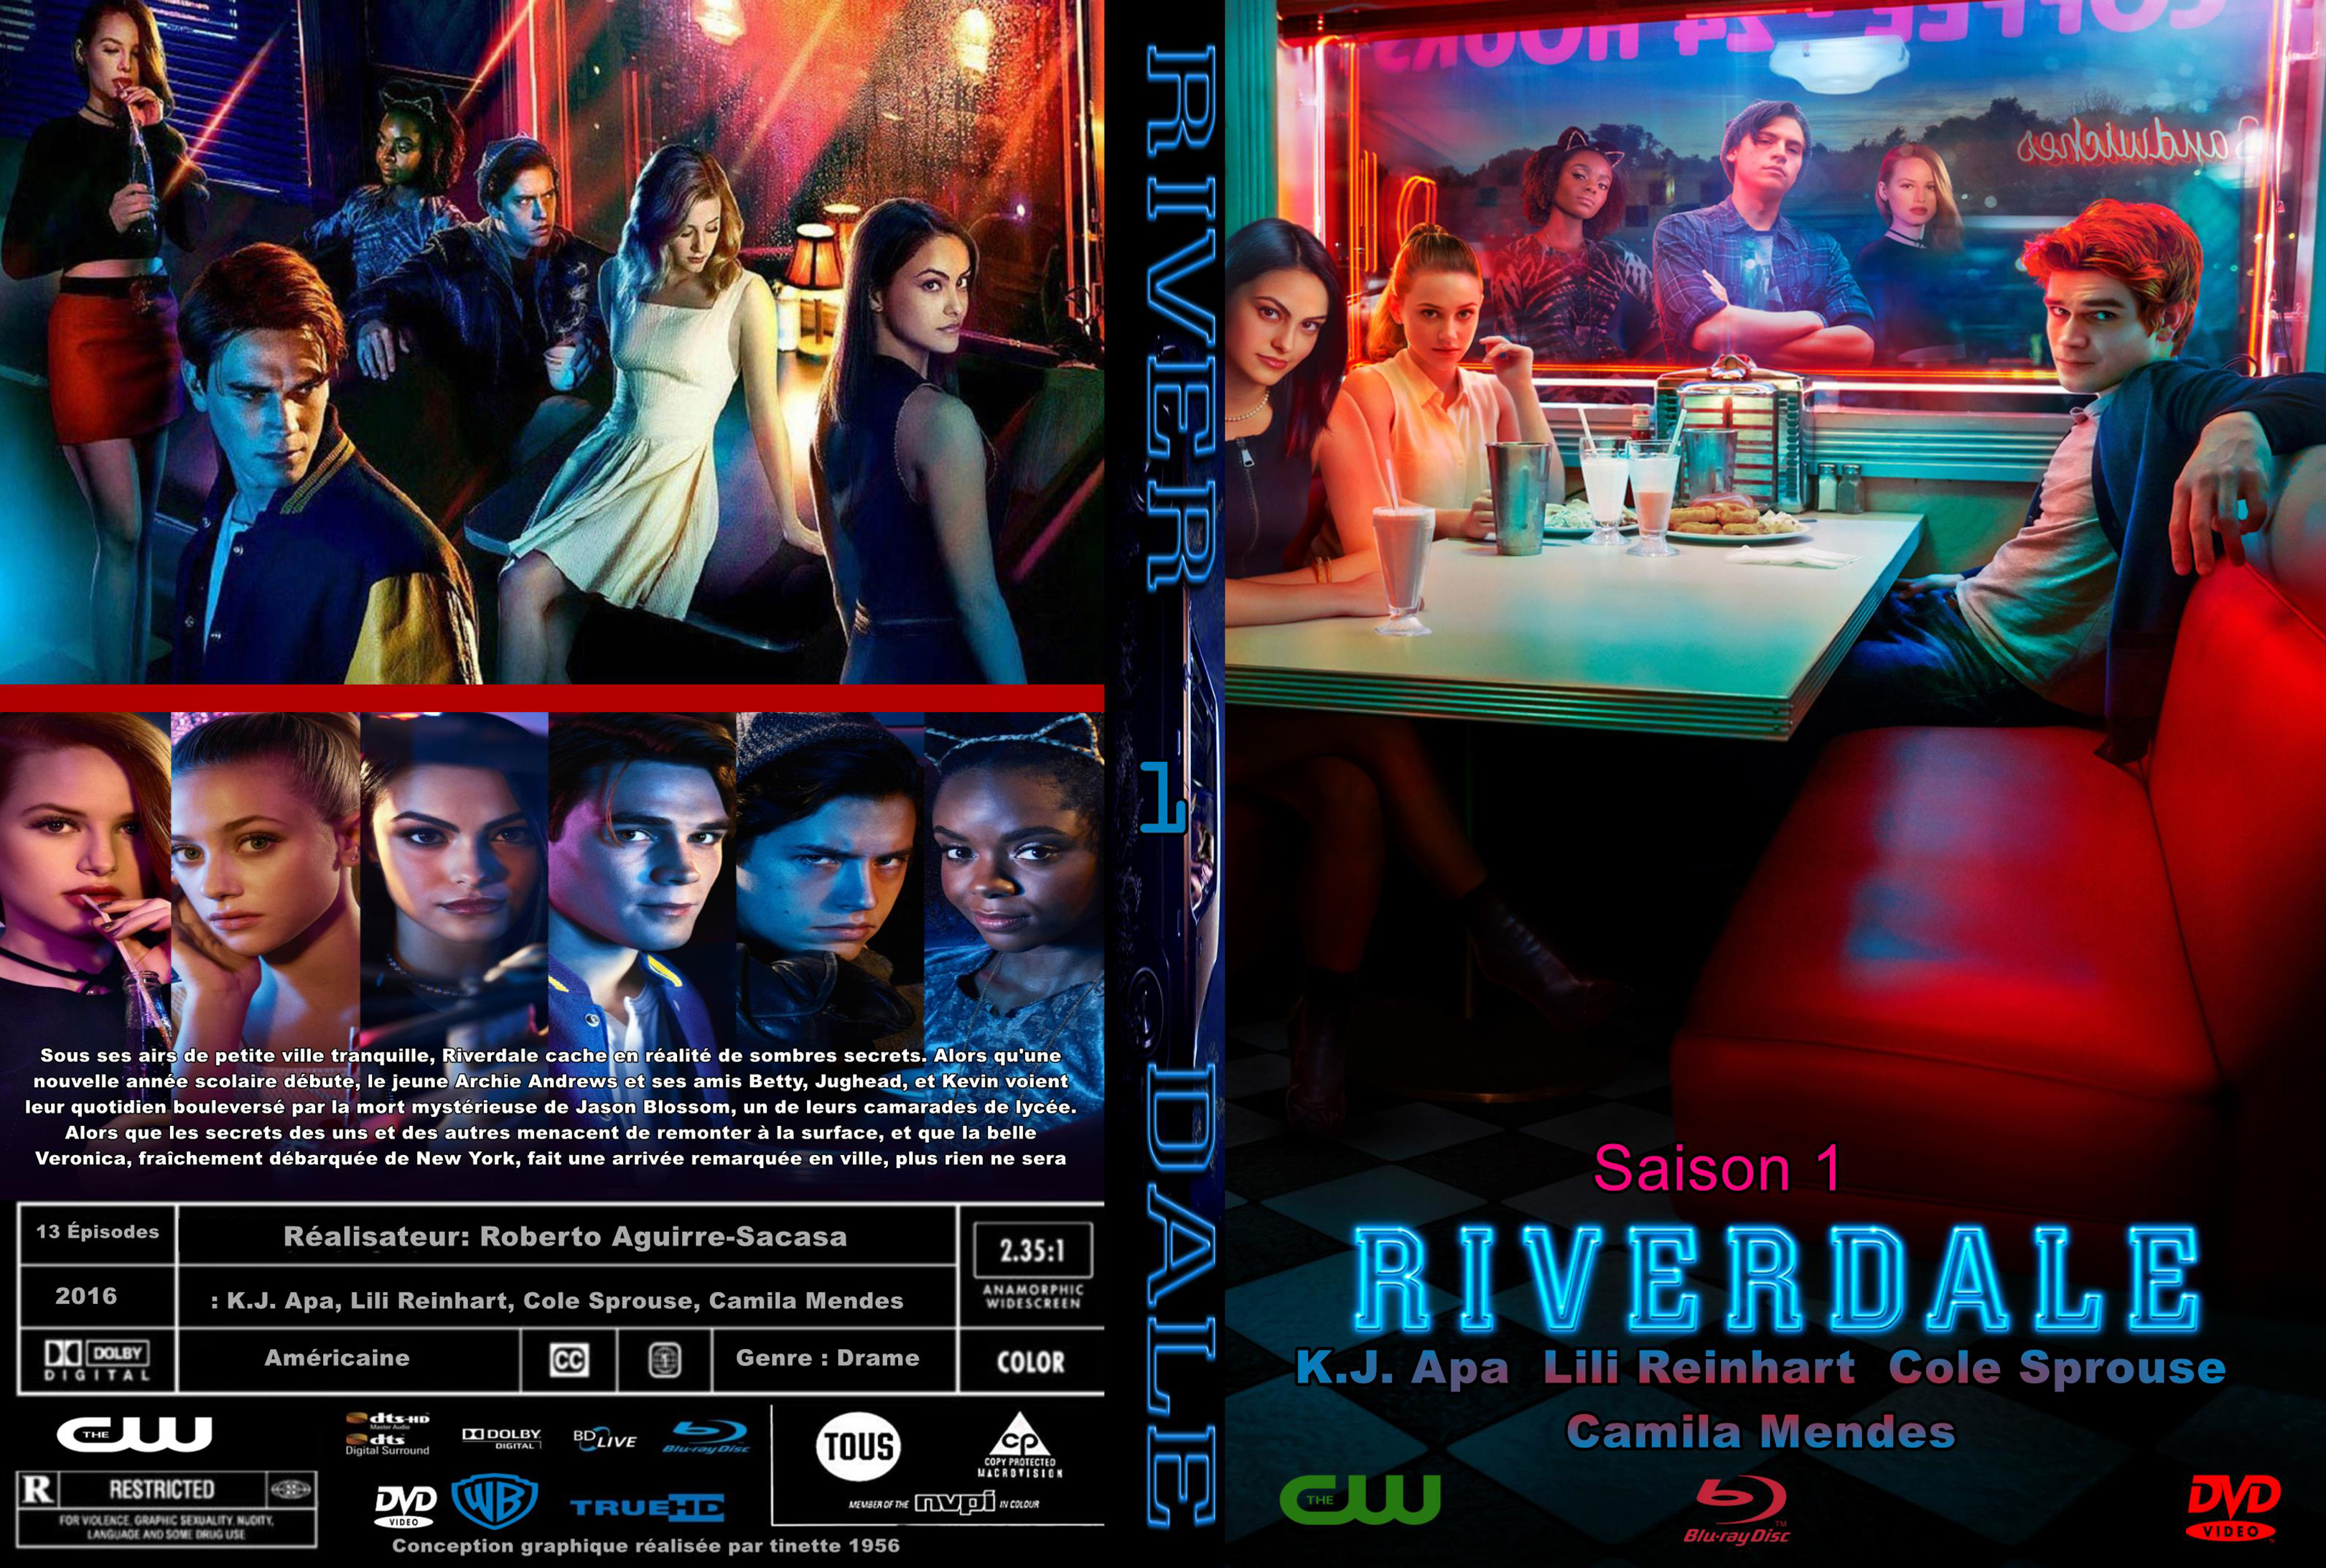 Jaquette DVD Riverdale saison 1 custom v2